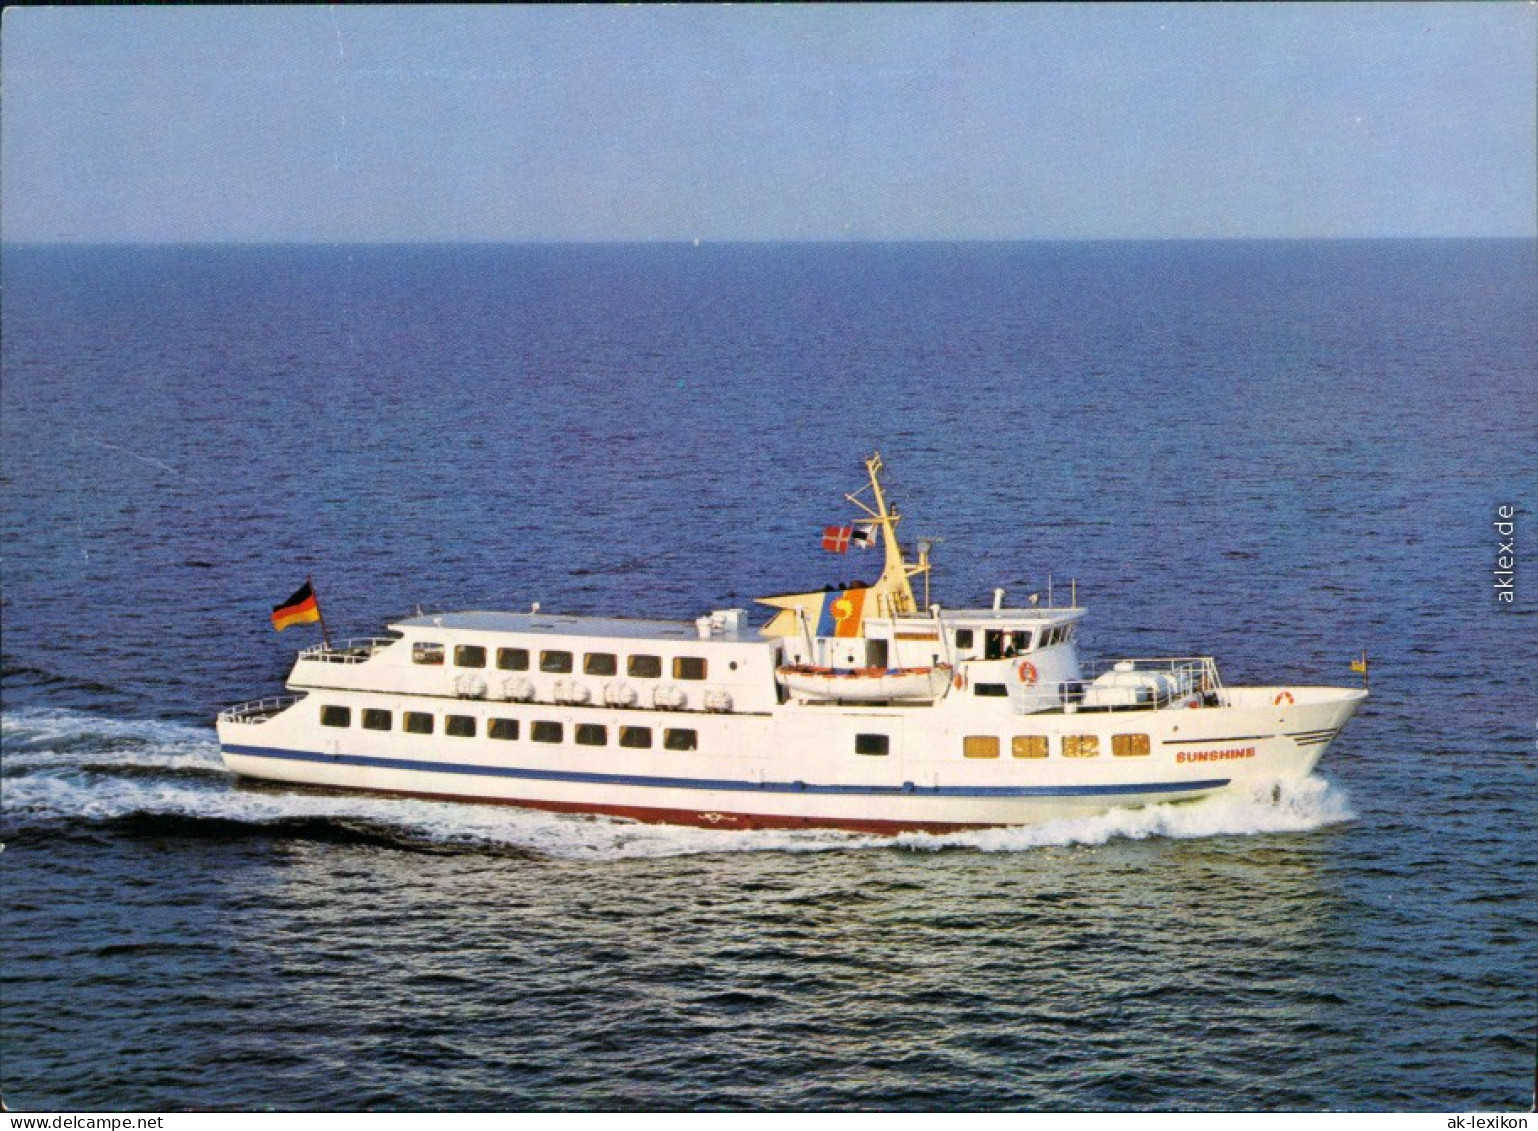 Ansichtskarte  Fährschiff MS "Sunshine" 1985 - Traghetti